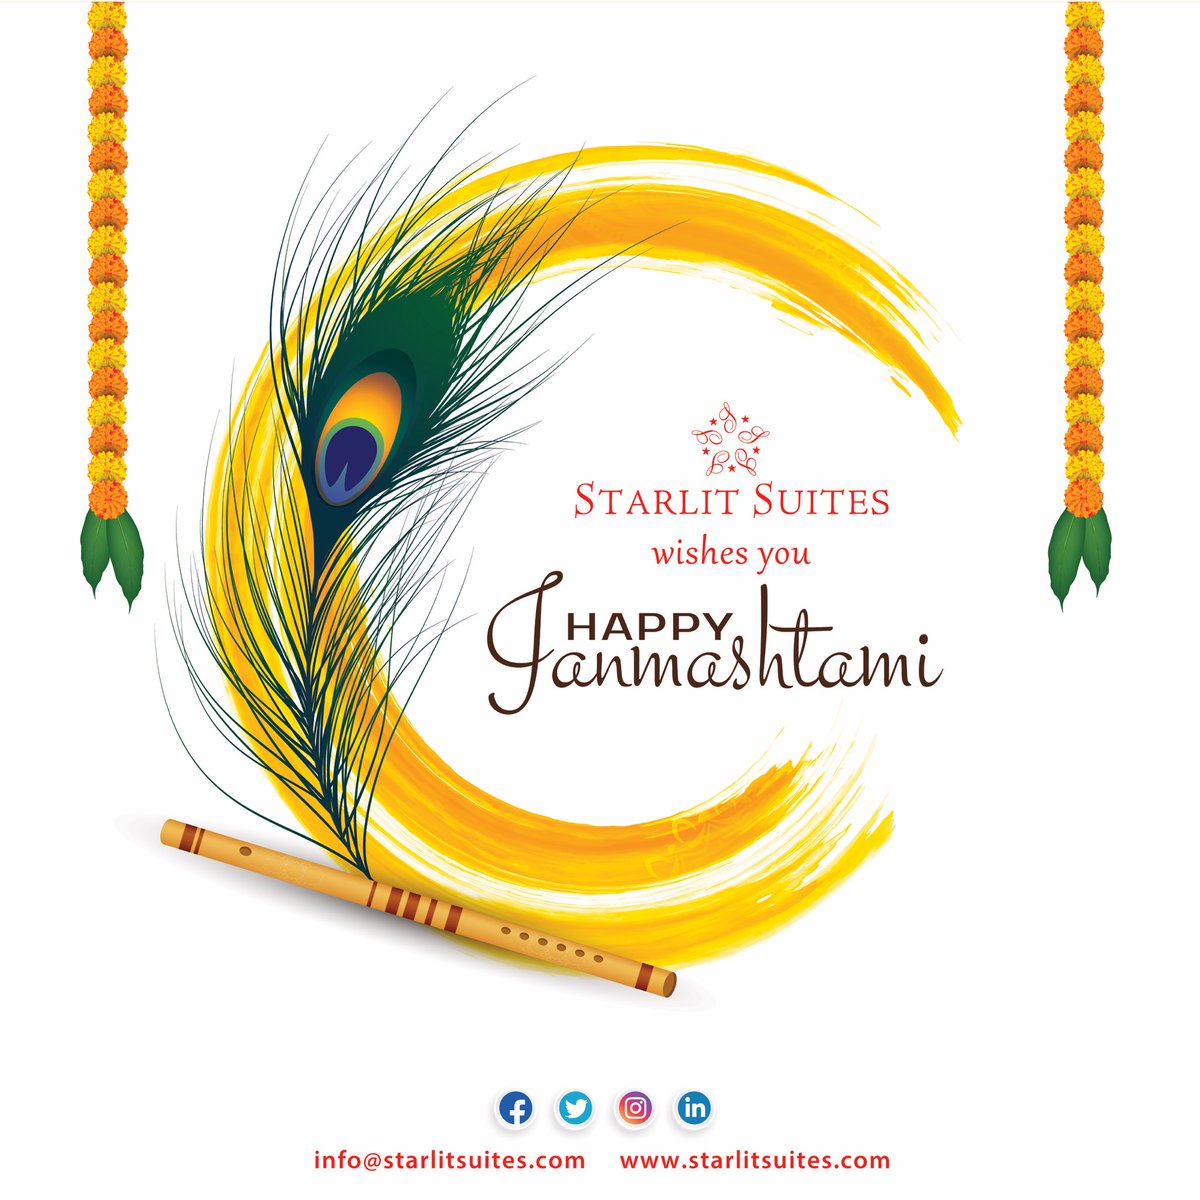 Here's wishing you and your family a happy #Janmashtmi from all of us at Starlit Suites!✨ #HappyJanmashtami #starlitsuites #Bengaluru #kochi #Neemrana #Tirupati #shirdi #celebration #specialevents #festival #servicedapartments #hospitality #hotel #Aparthotel